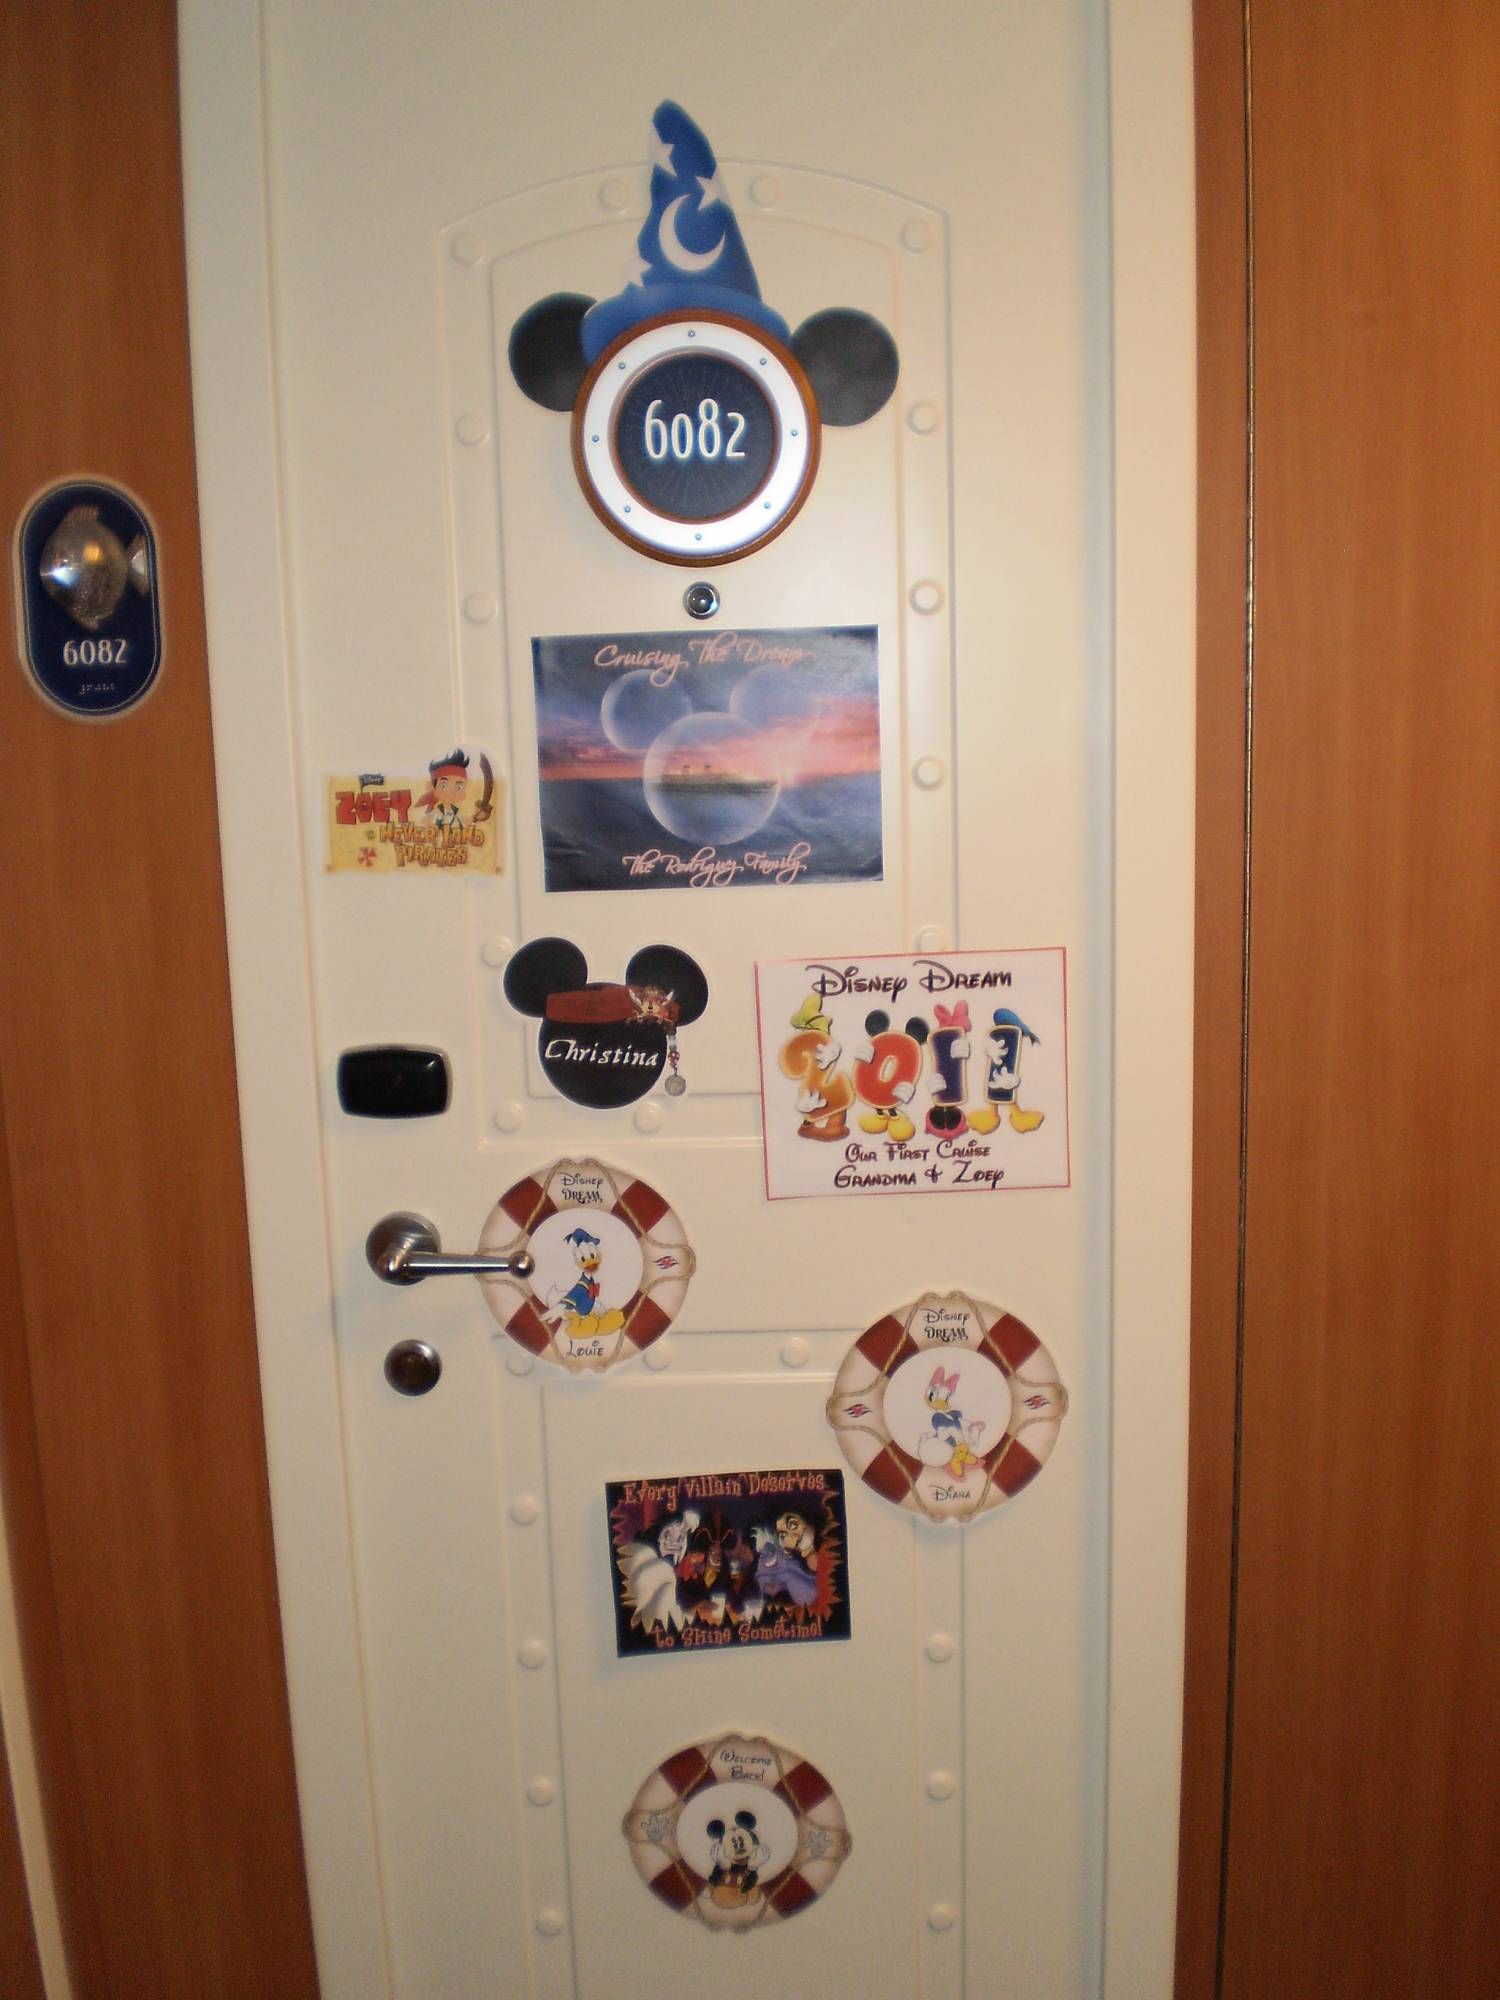 Disney Dream Decorated Stateroom Door